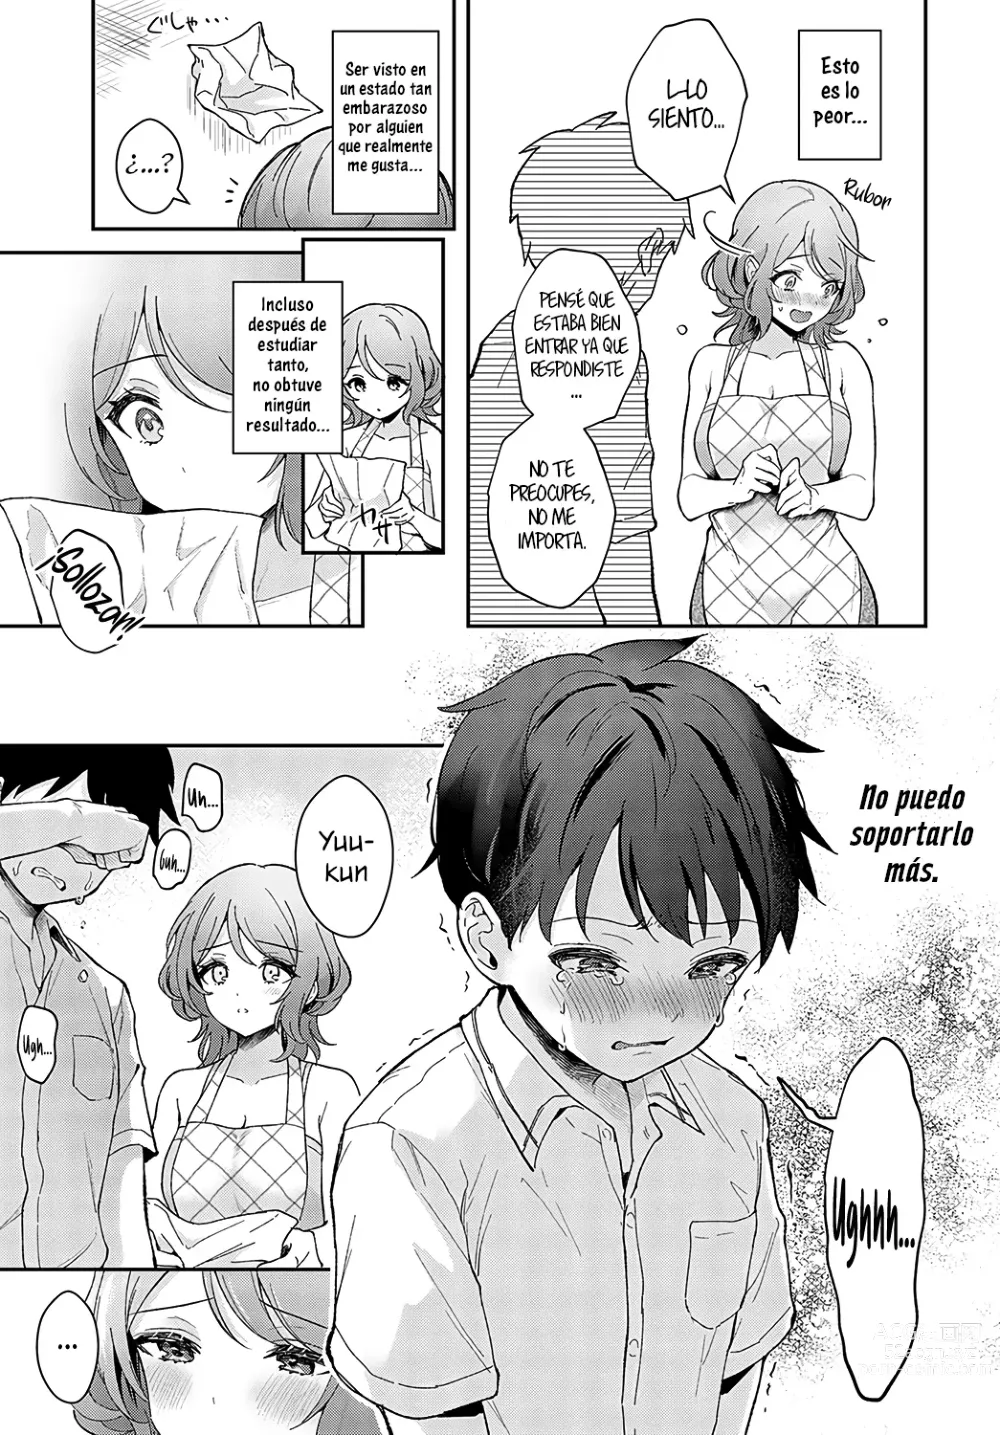 Page 7 of manga Junto a Onei-chan